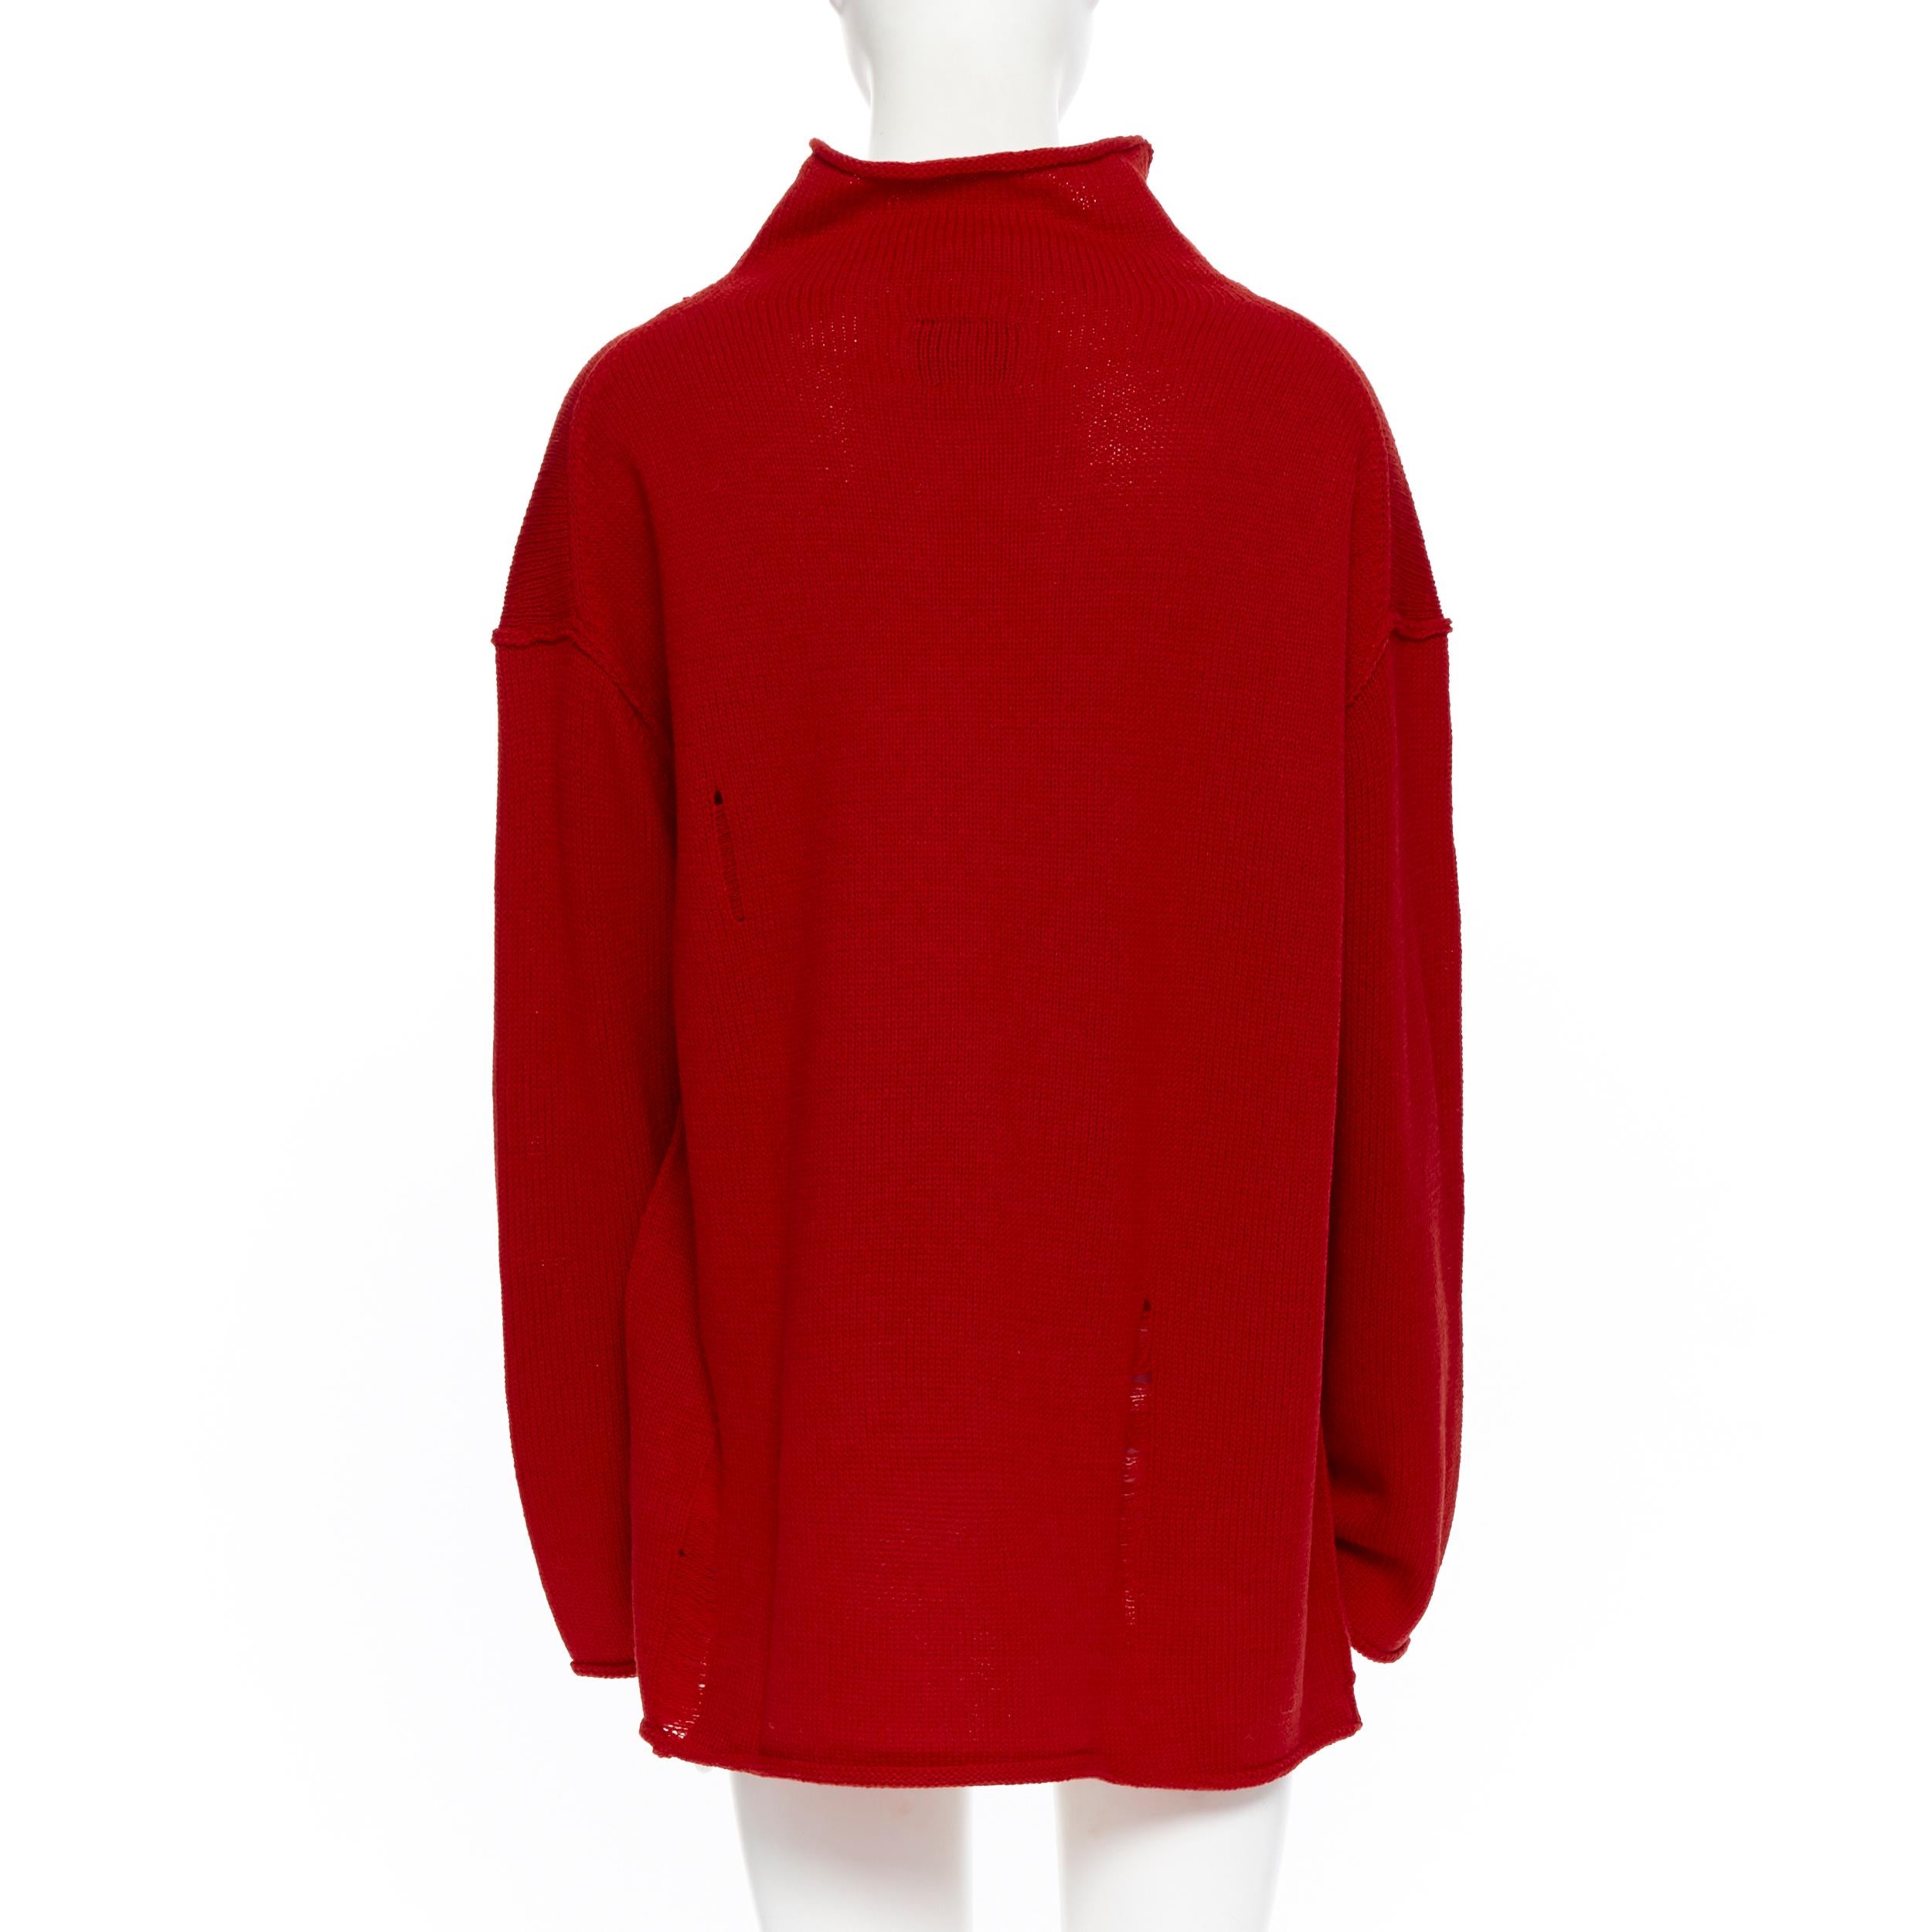 new B YOHJI YAMAMOTO Unisex 100% wool red distressed holey raw edge sweater M 1